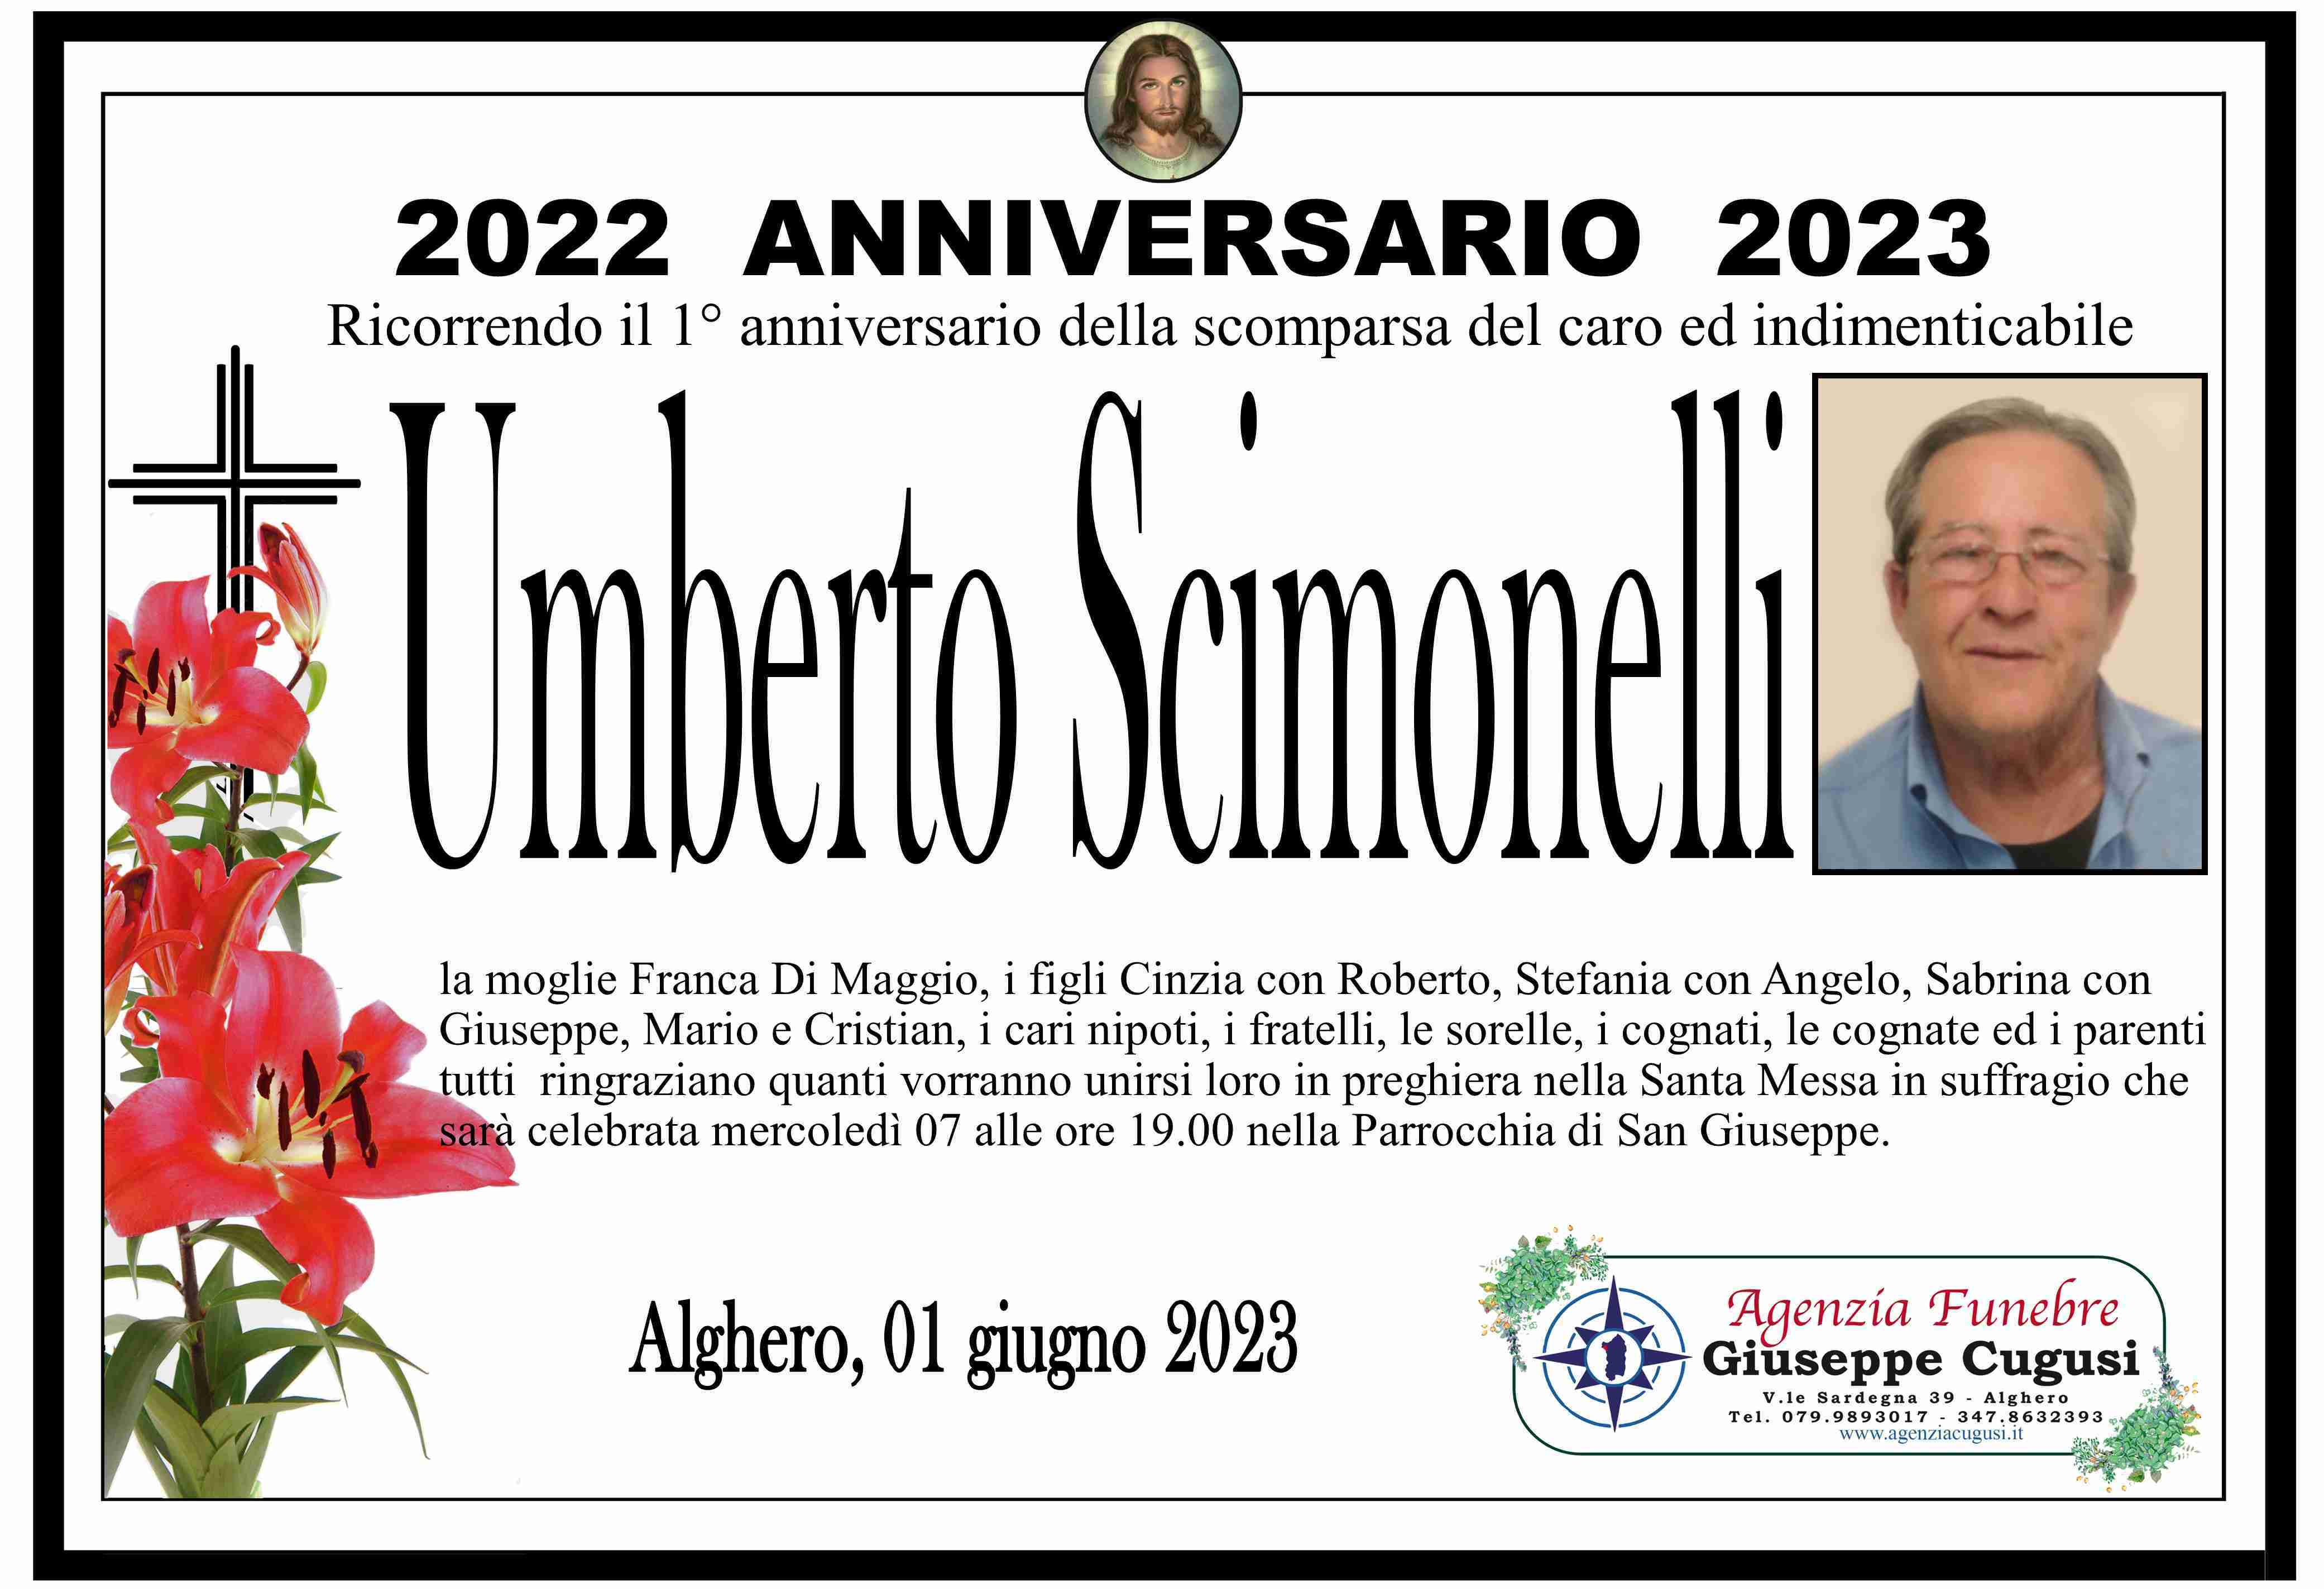 Umberto Scimonelli